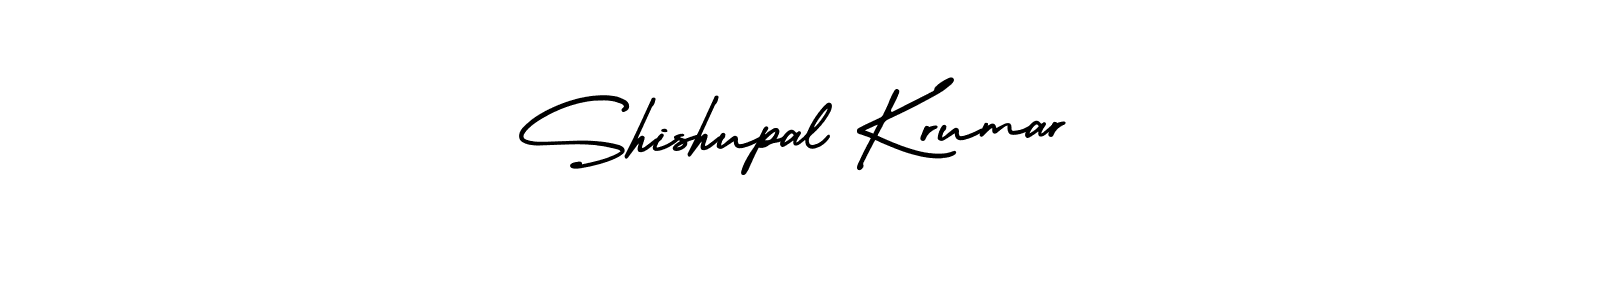 How to Draw Shishupal Krumar signature style? AmerikaSignatureDemo-Regular is a latest design signature styles for name Shishupal Krumar. Shishupal Krumar signature style 3 images and pictures png